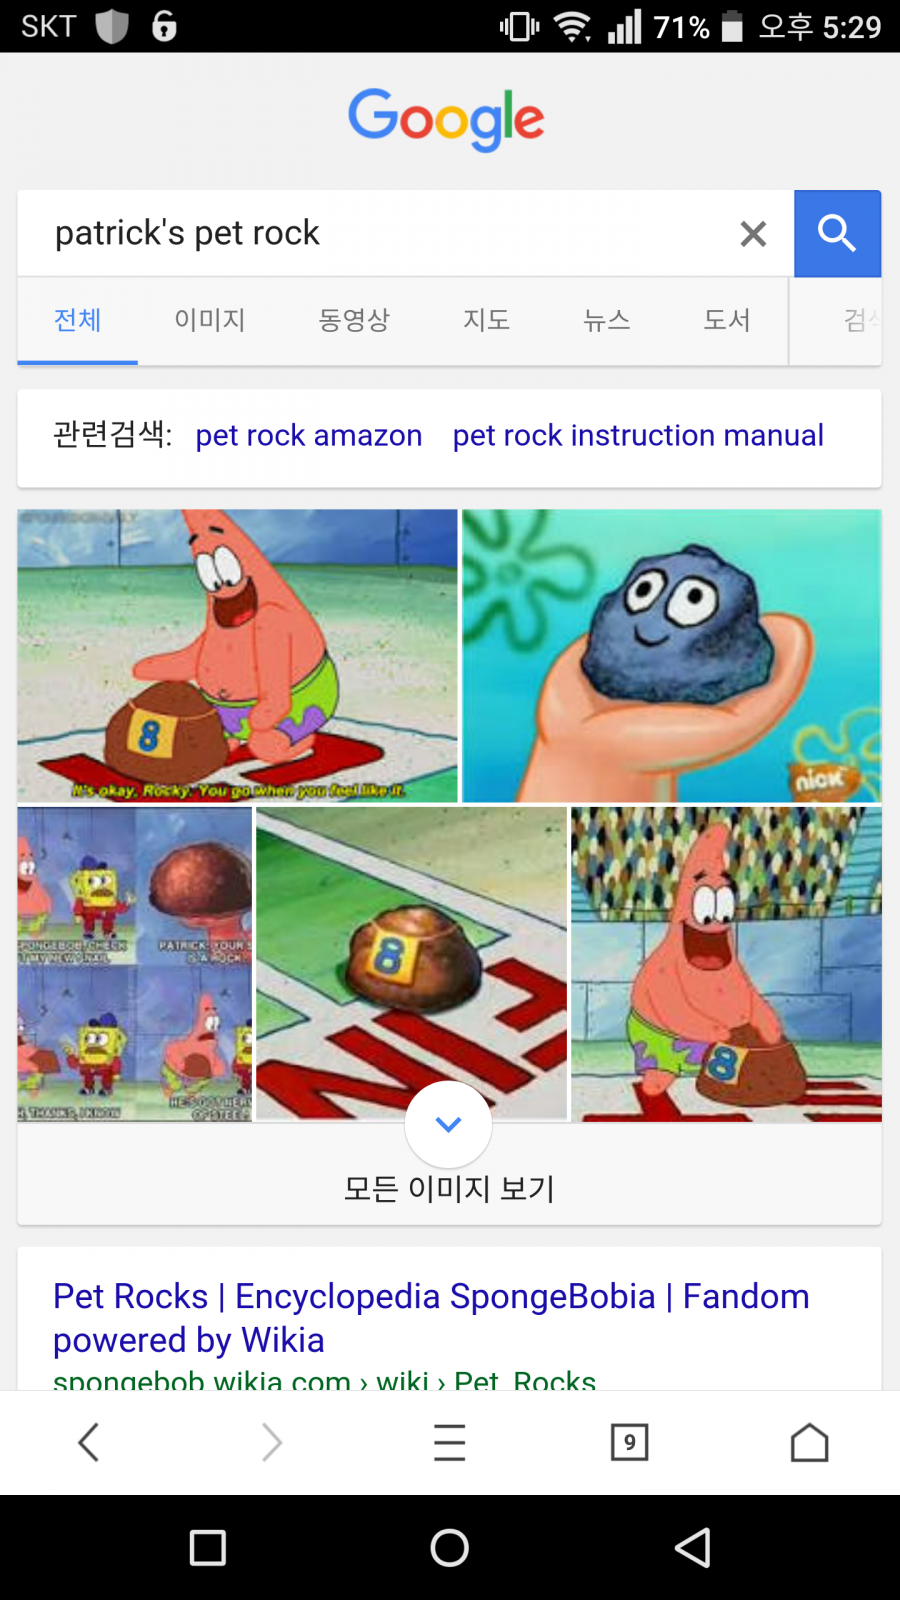 Pet rocks, Encyclopedia SpongeBobia